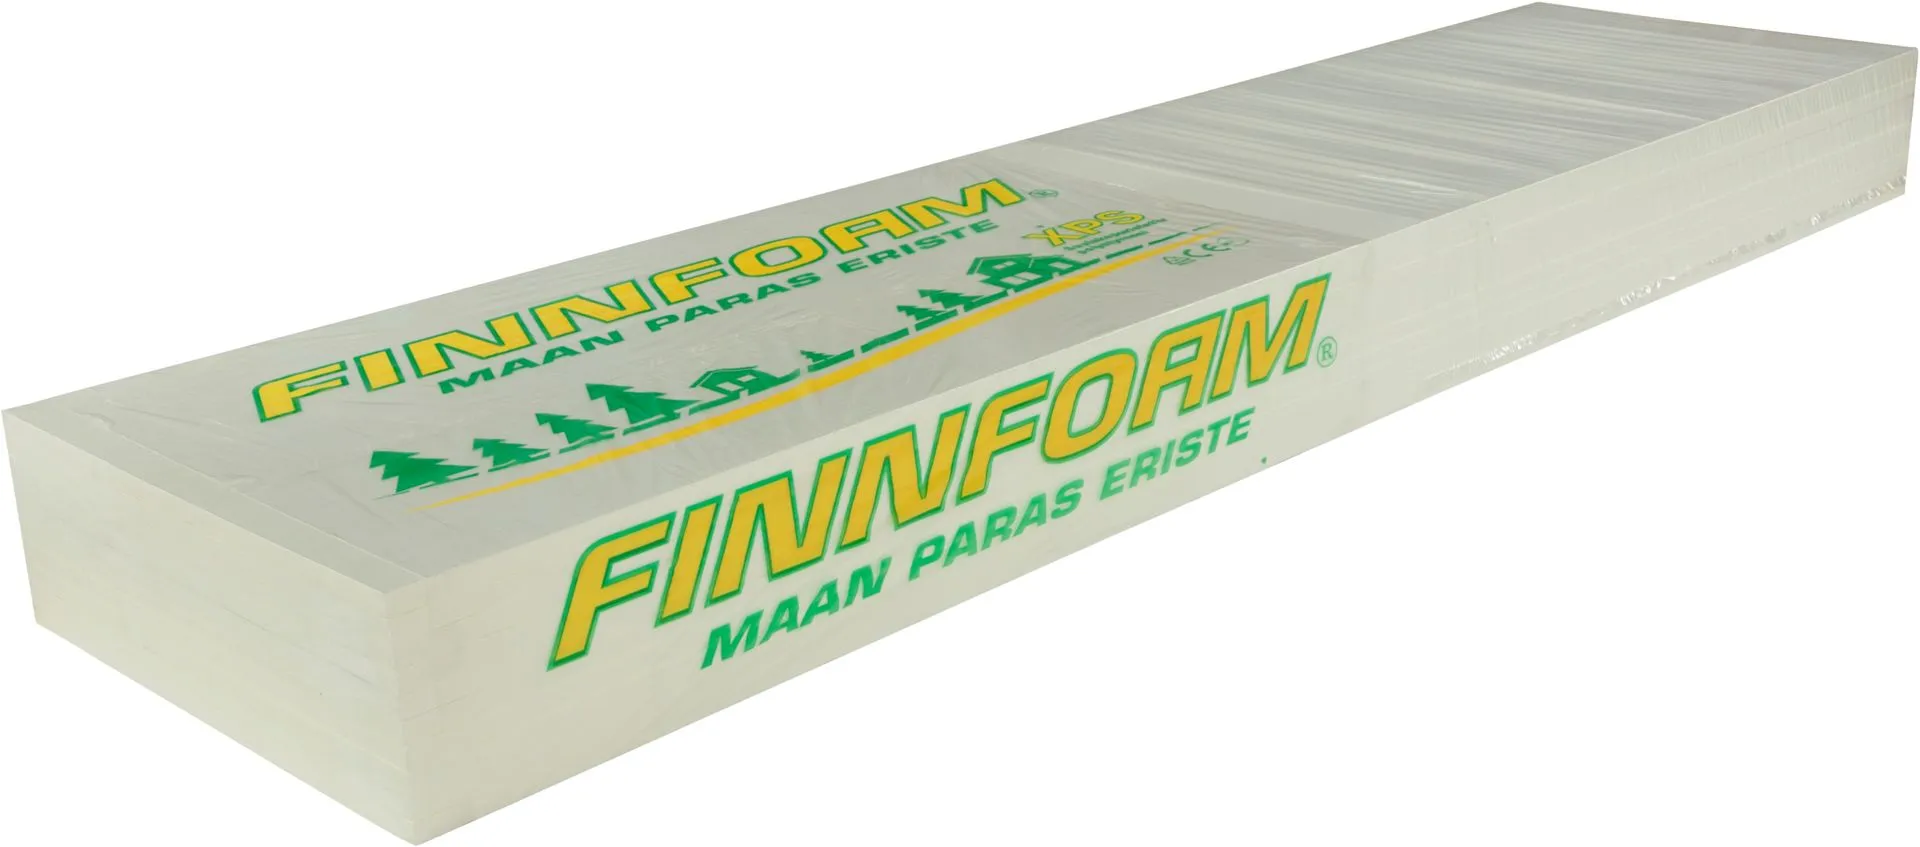 Finnfoam FI-300/20 eristyslevy suorareunainen 20x600x2500 1,5m2 - 1